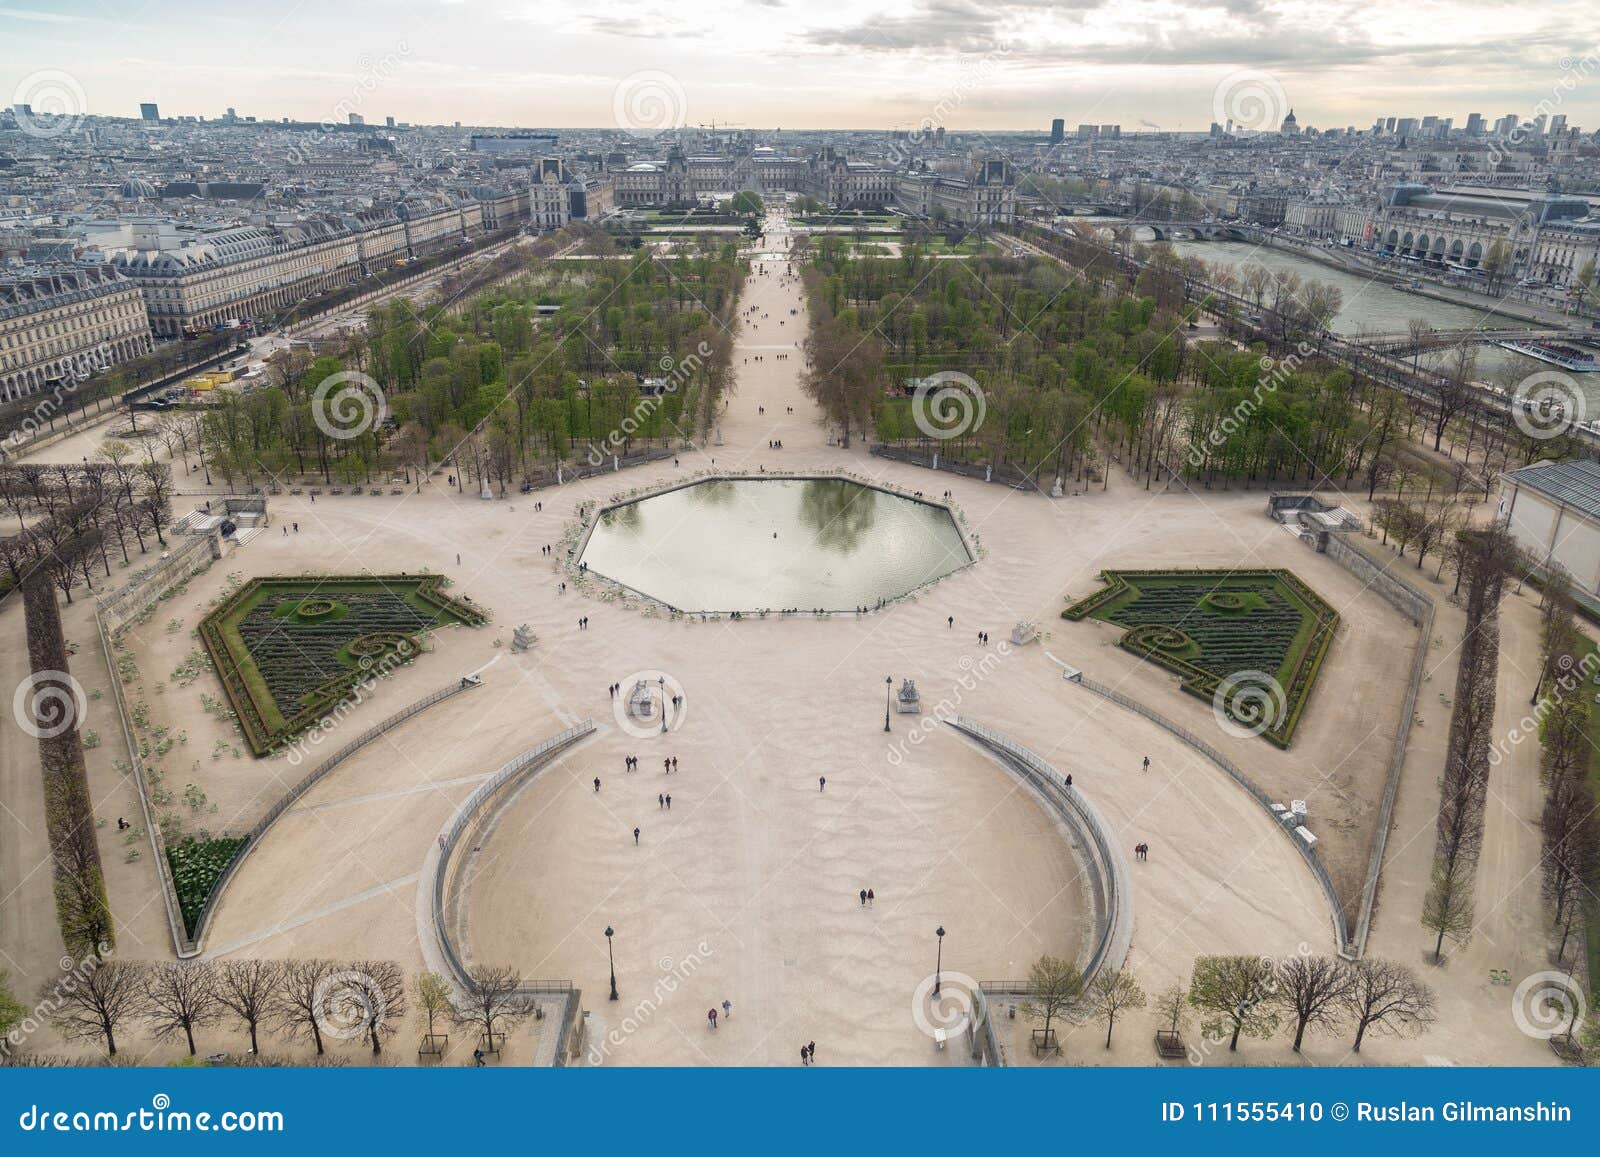 jardin des tuileries - the tuileries garden park in paris, france